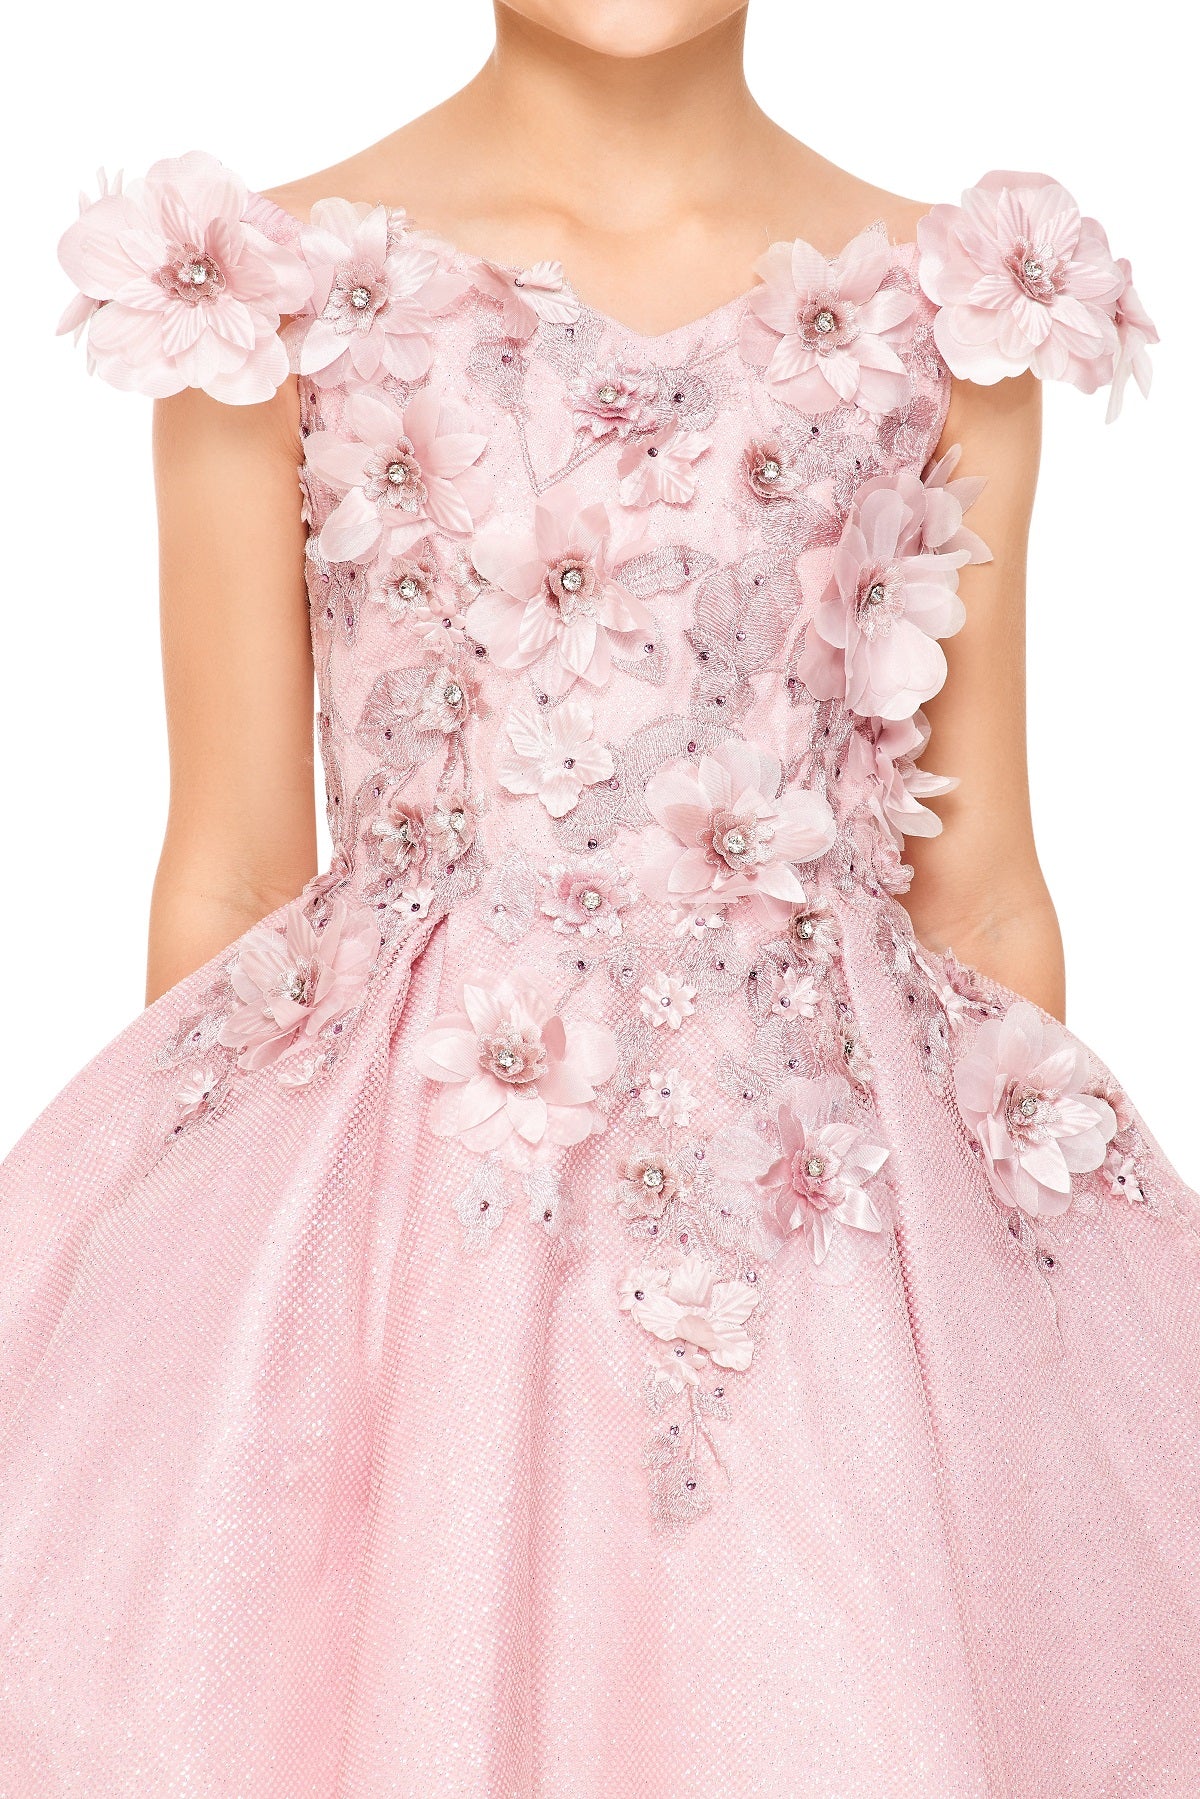 Girls Dress 04-3D flower girl dress